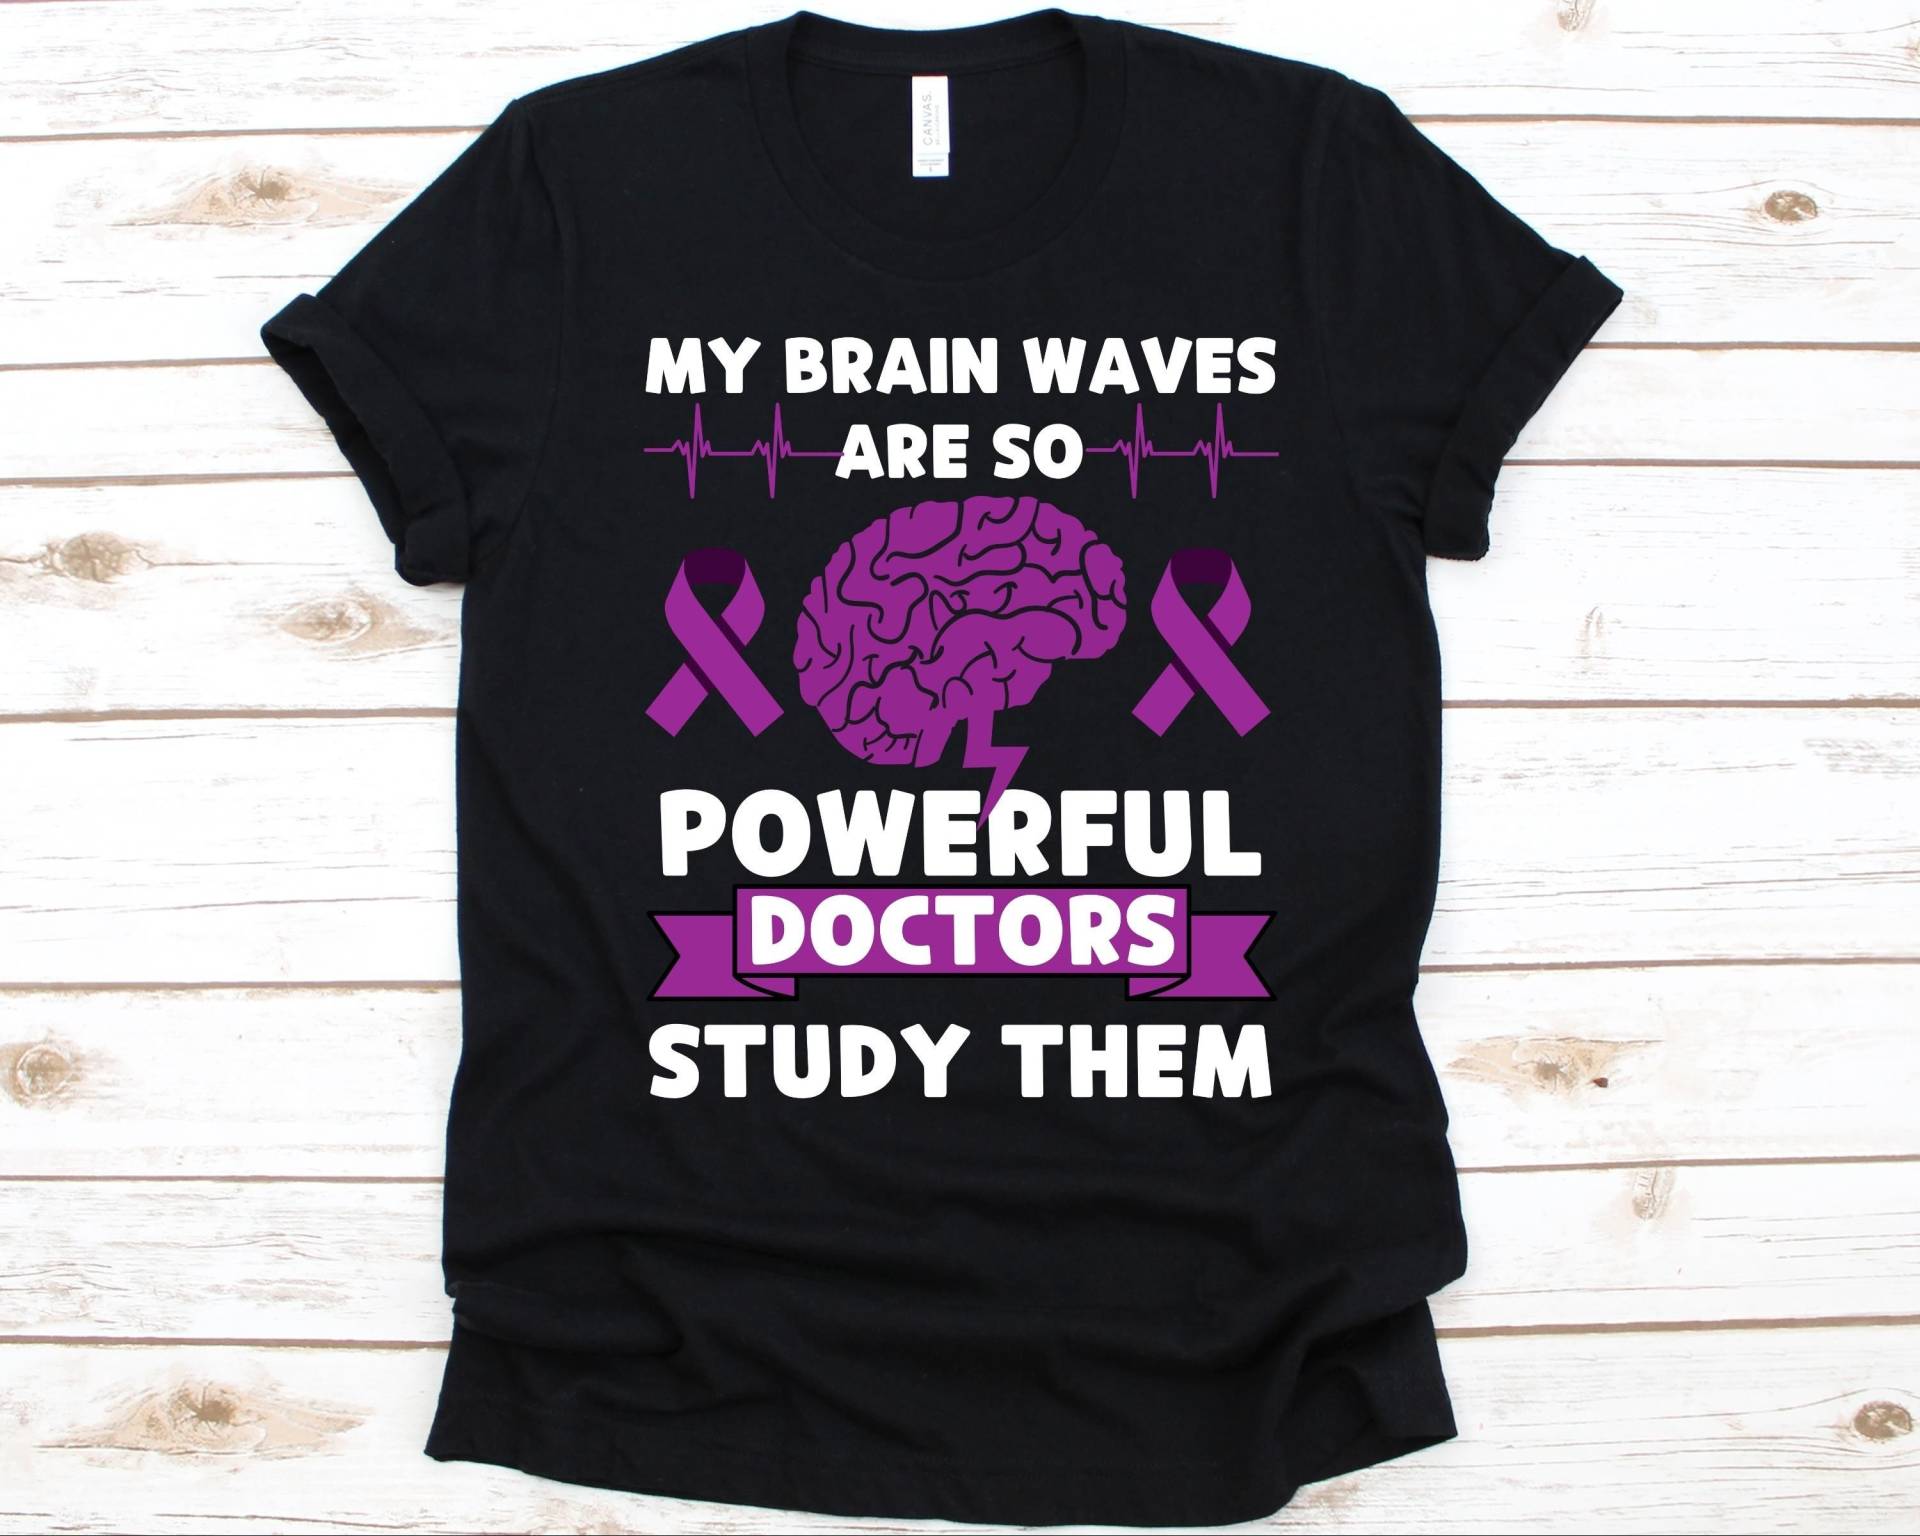 My Brain Waves Are So Powerful Doctors Study Them Shirt, Epilepsie Awareness T-Shirt Für Männer Frauen, Lila Band T-Shirt, Shirt von AbbysDesignFactory